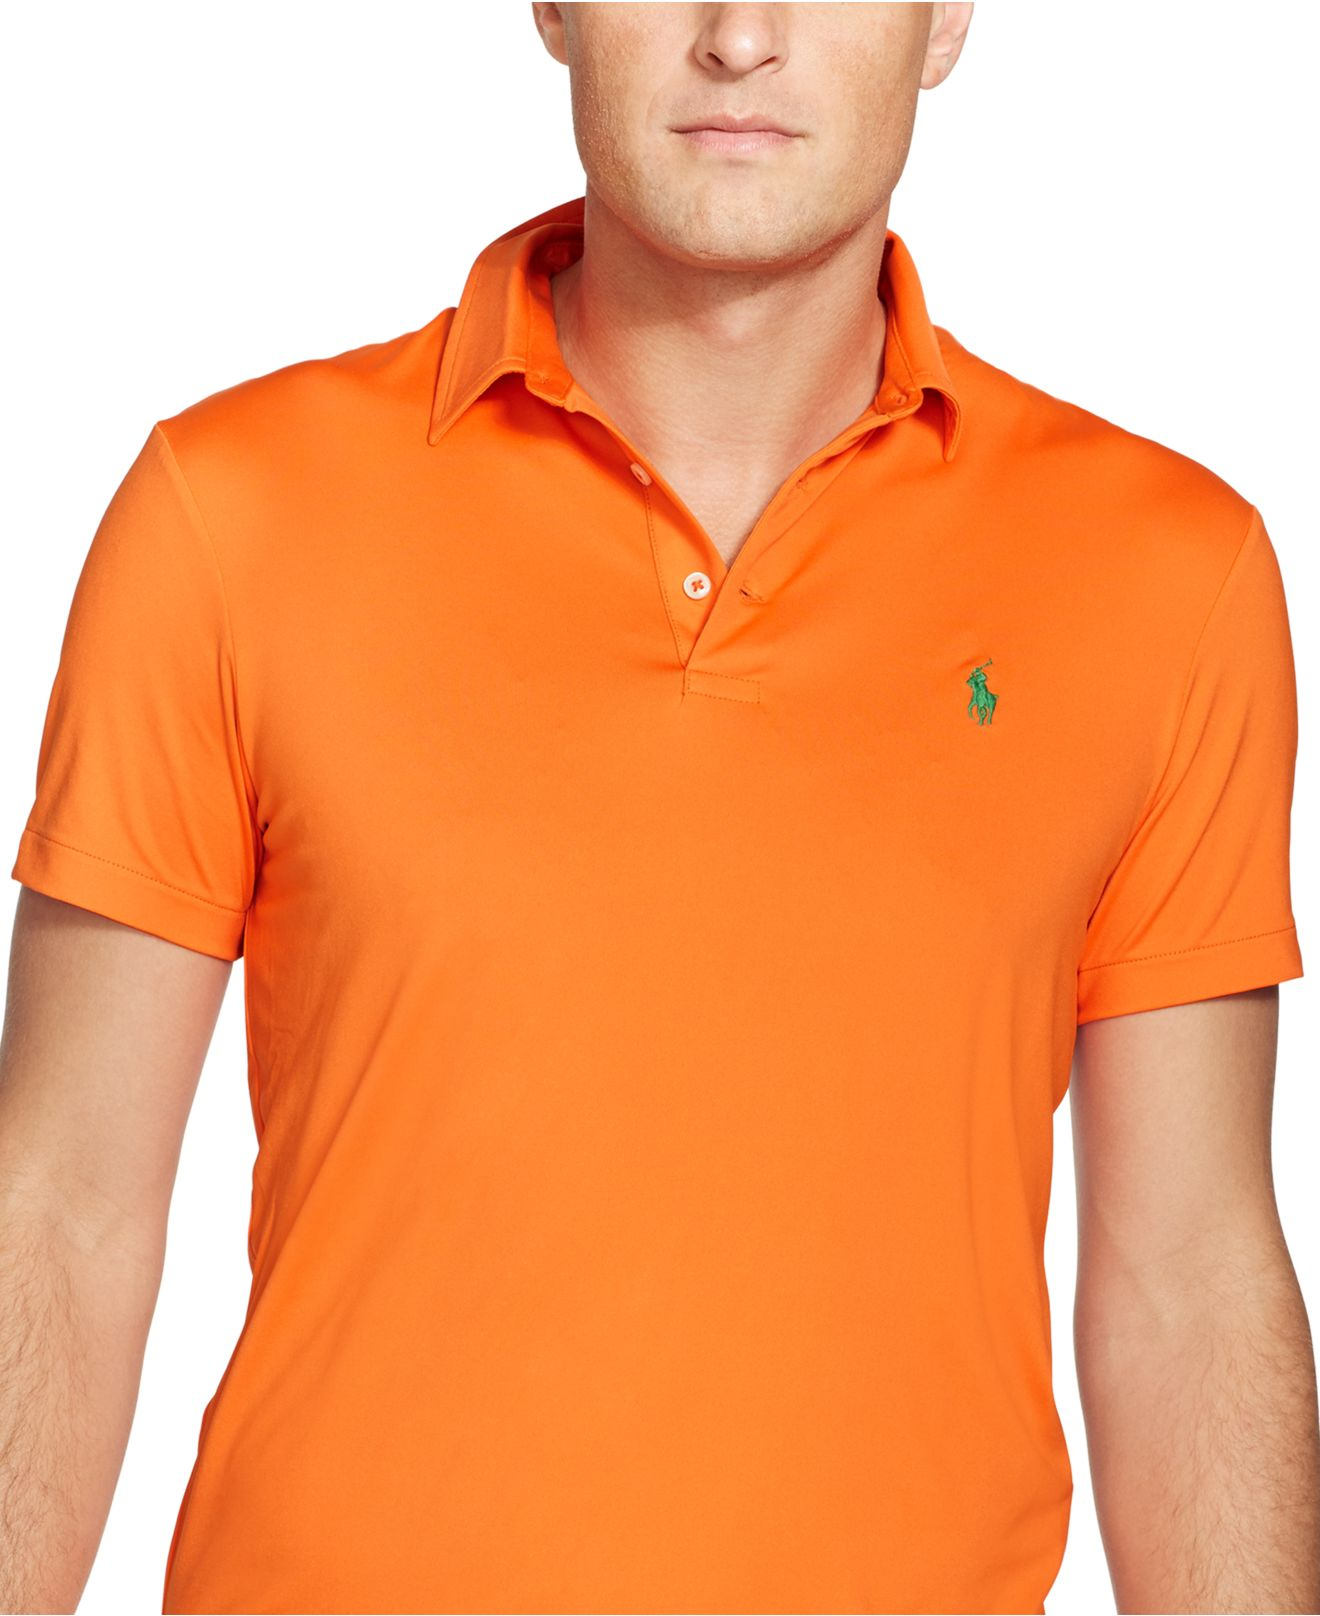 Lyst - Polo ralph lauren Big & Tall Performance Polo Shirt in Orange ...